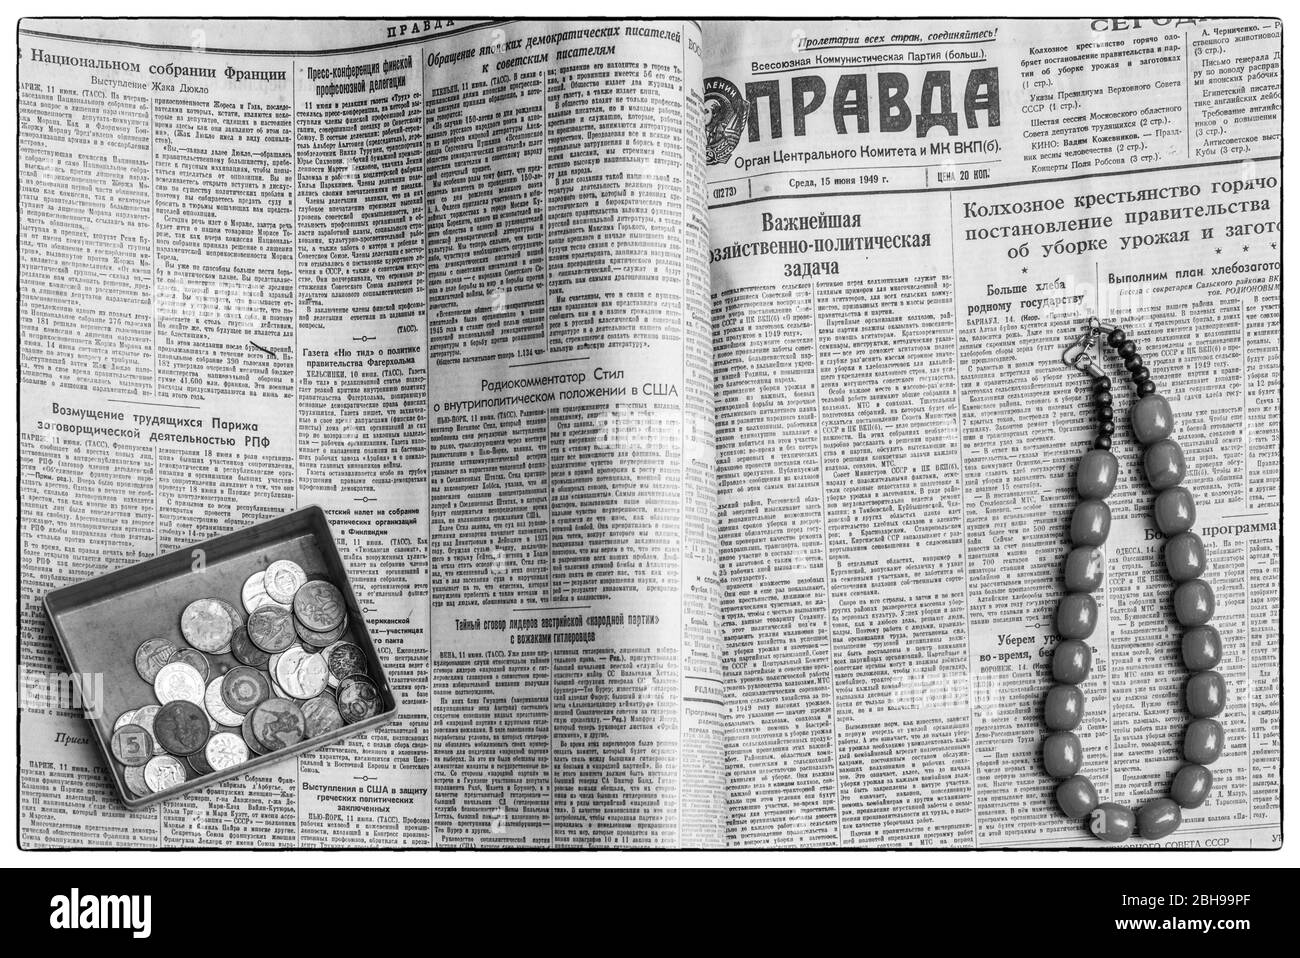 Georgia, Tbilisi, Dry Bridge Market, souvenir market, old issues of Soviet newspaper Pravda, coins, prayer chain Stock Photo